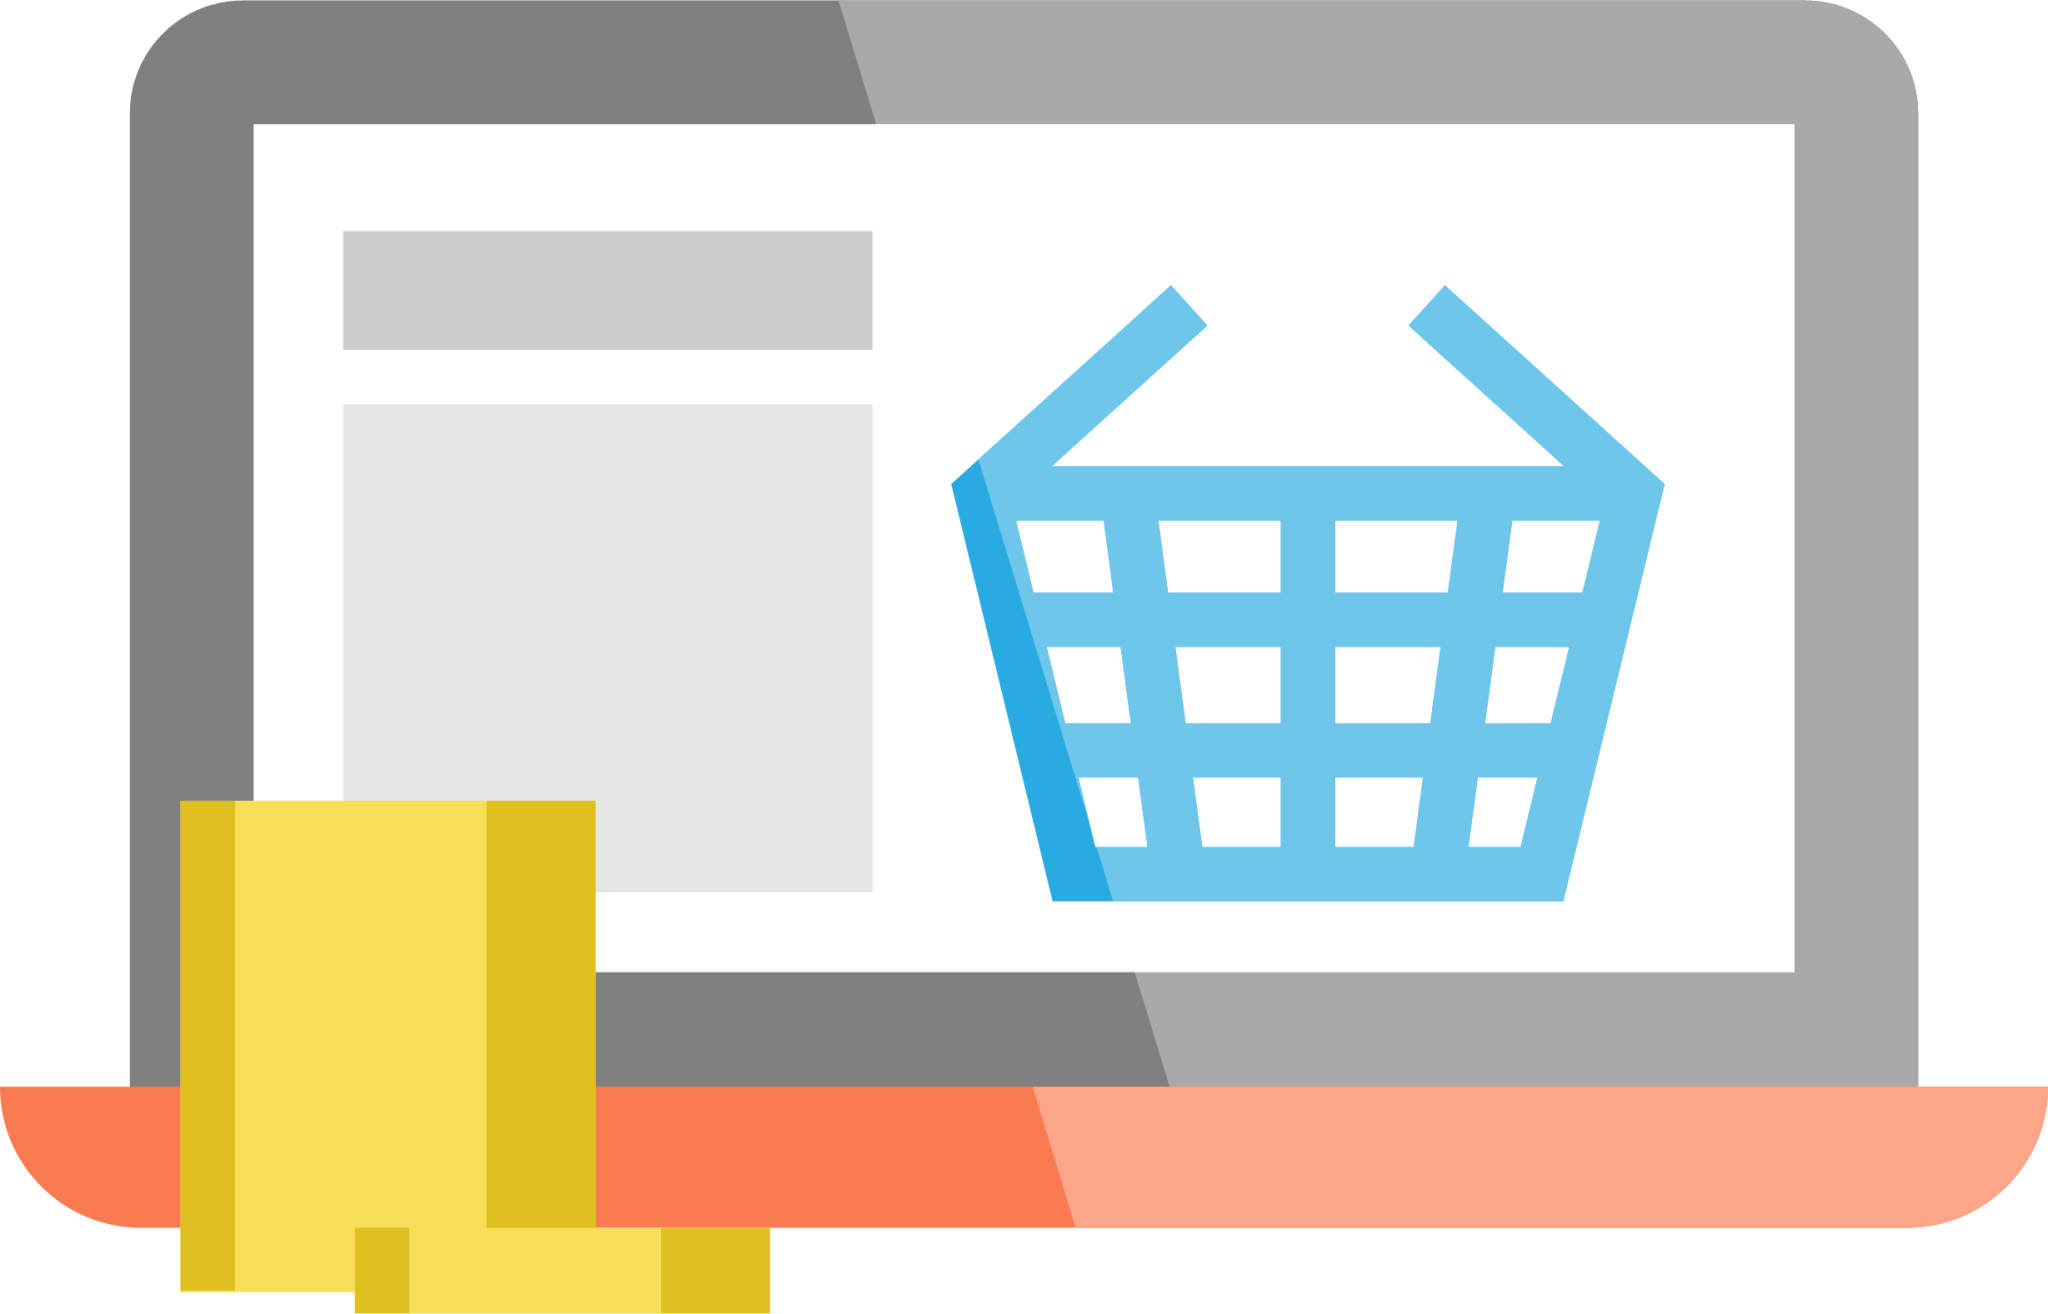 online shop 3 icon